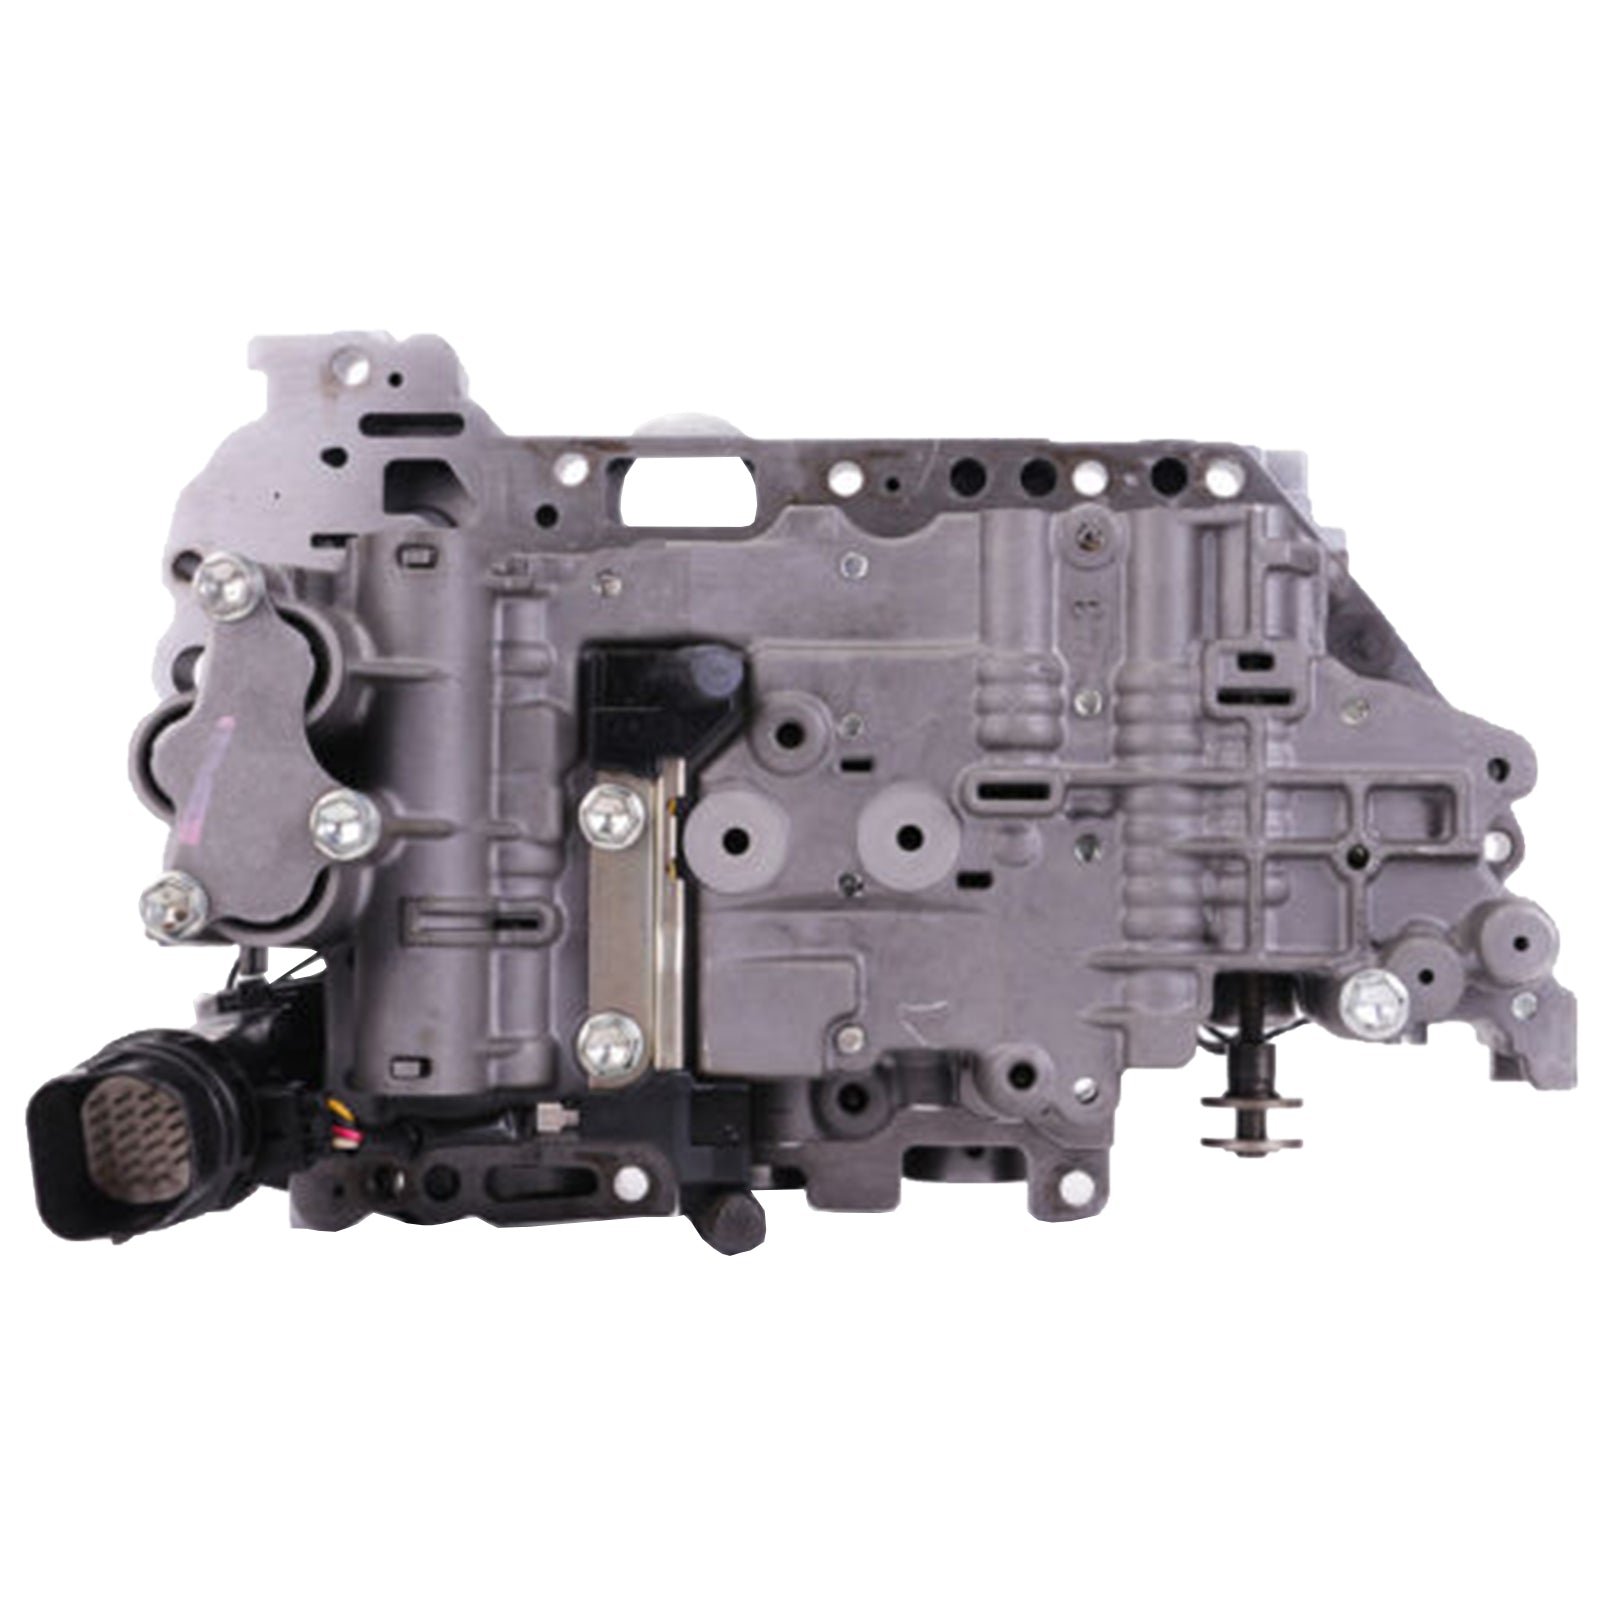 Toyota MARK X ZIO V6 3.5L 2007-2011 Corps de soupape de transmission U660E avec 7 solénoïdes